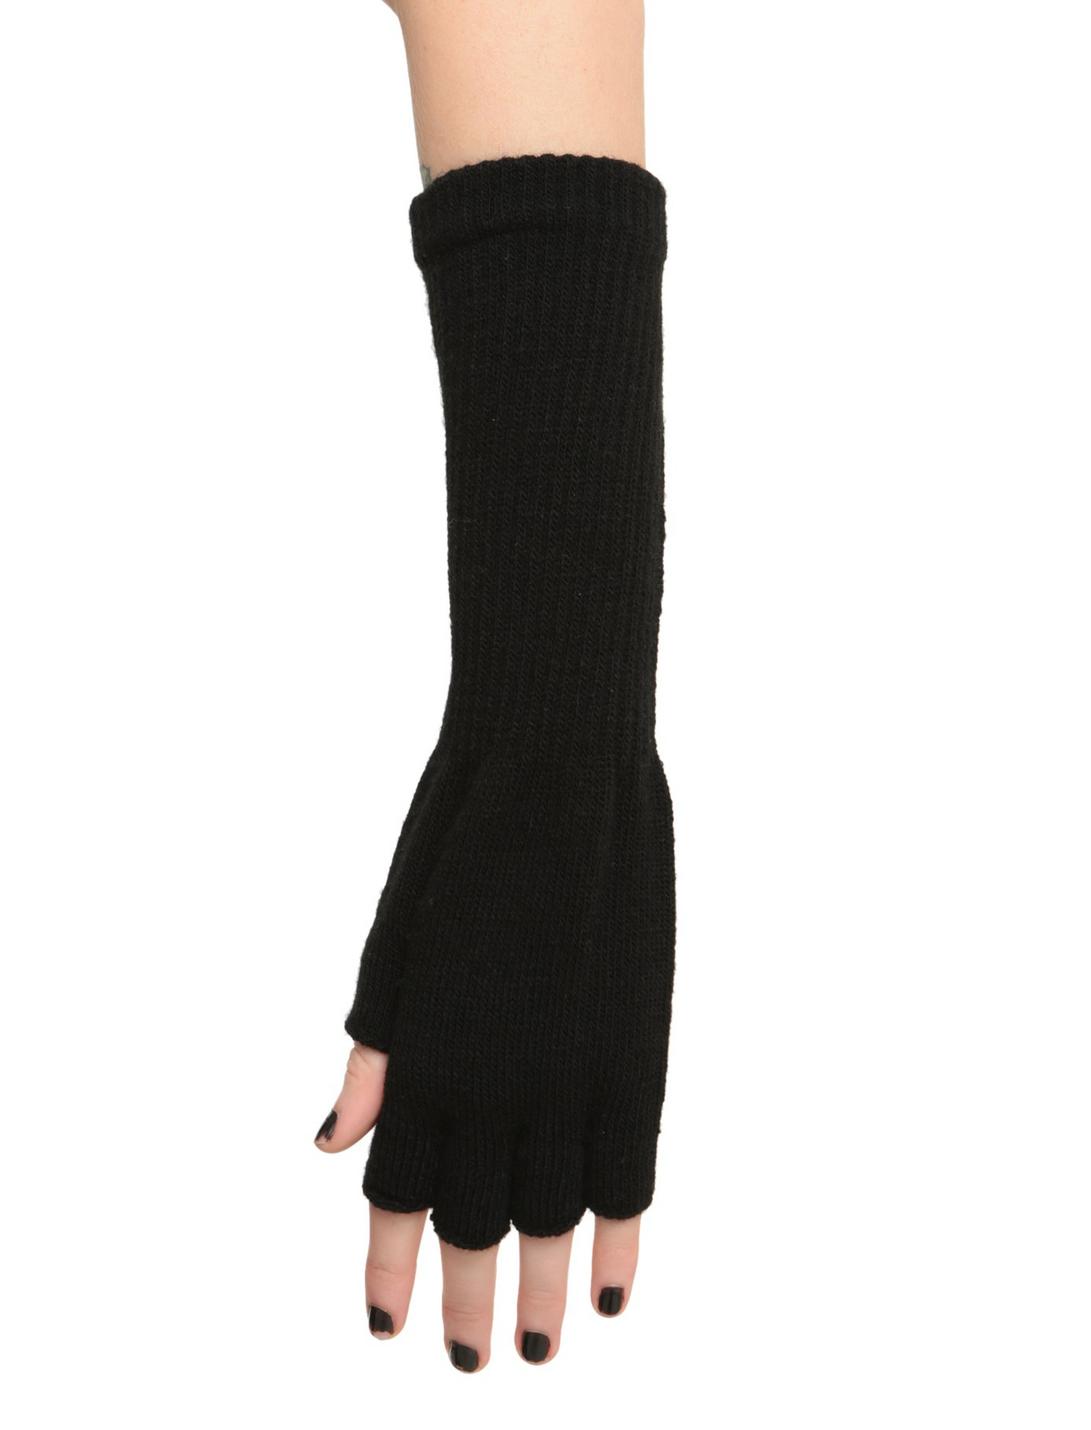 Black Knit Extended Cuff Fingerless Gloves, , hi-res